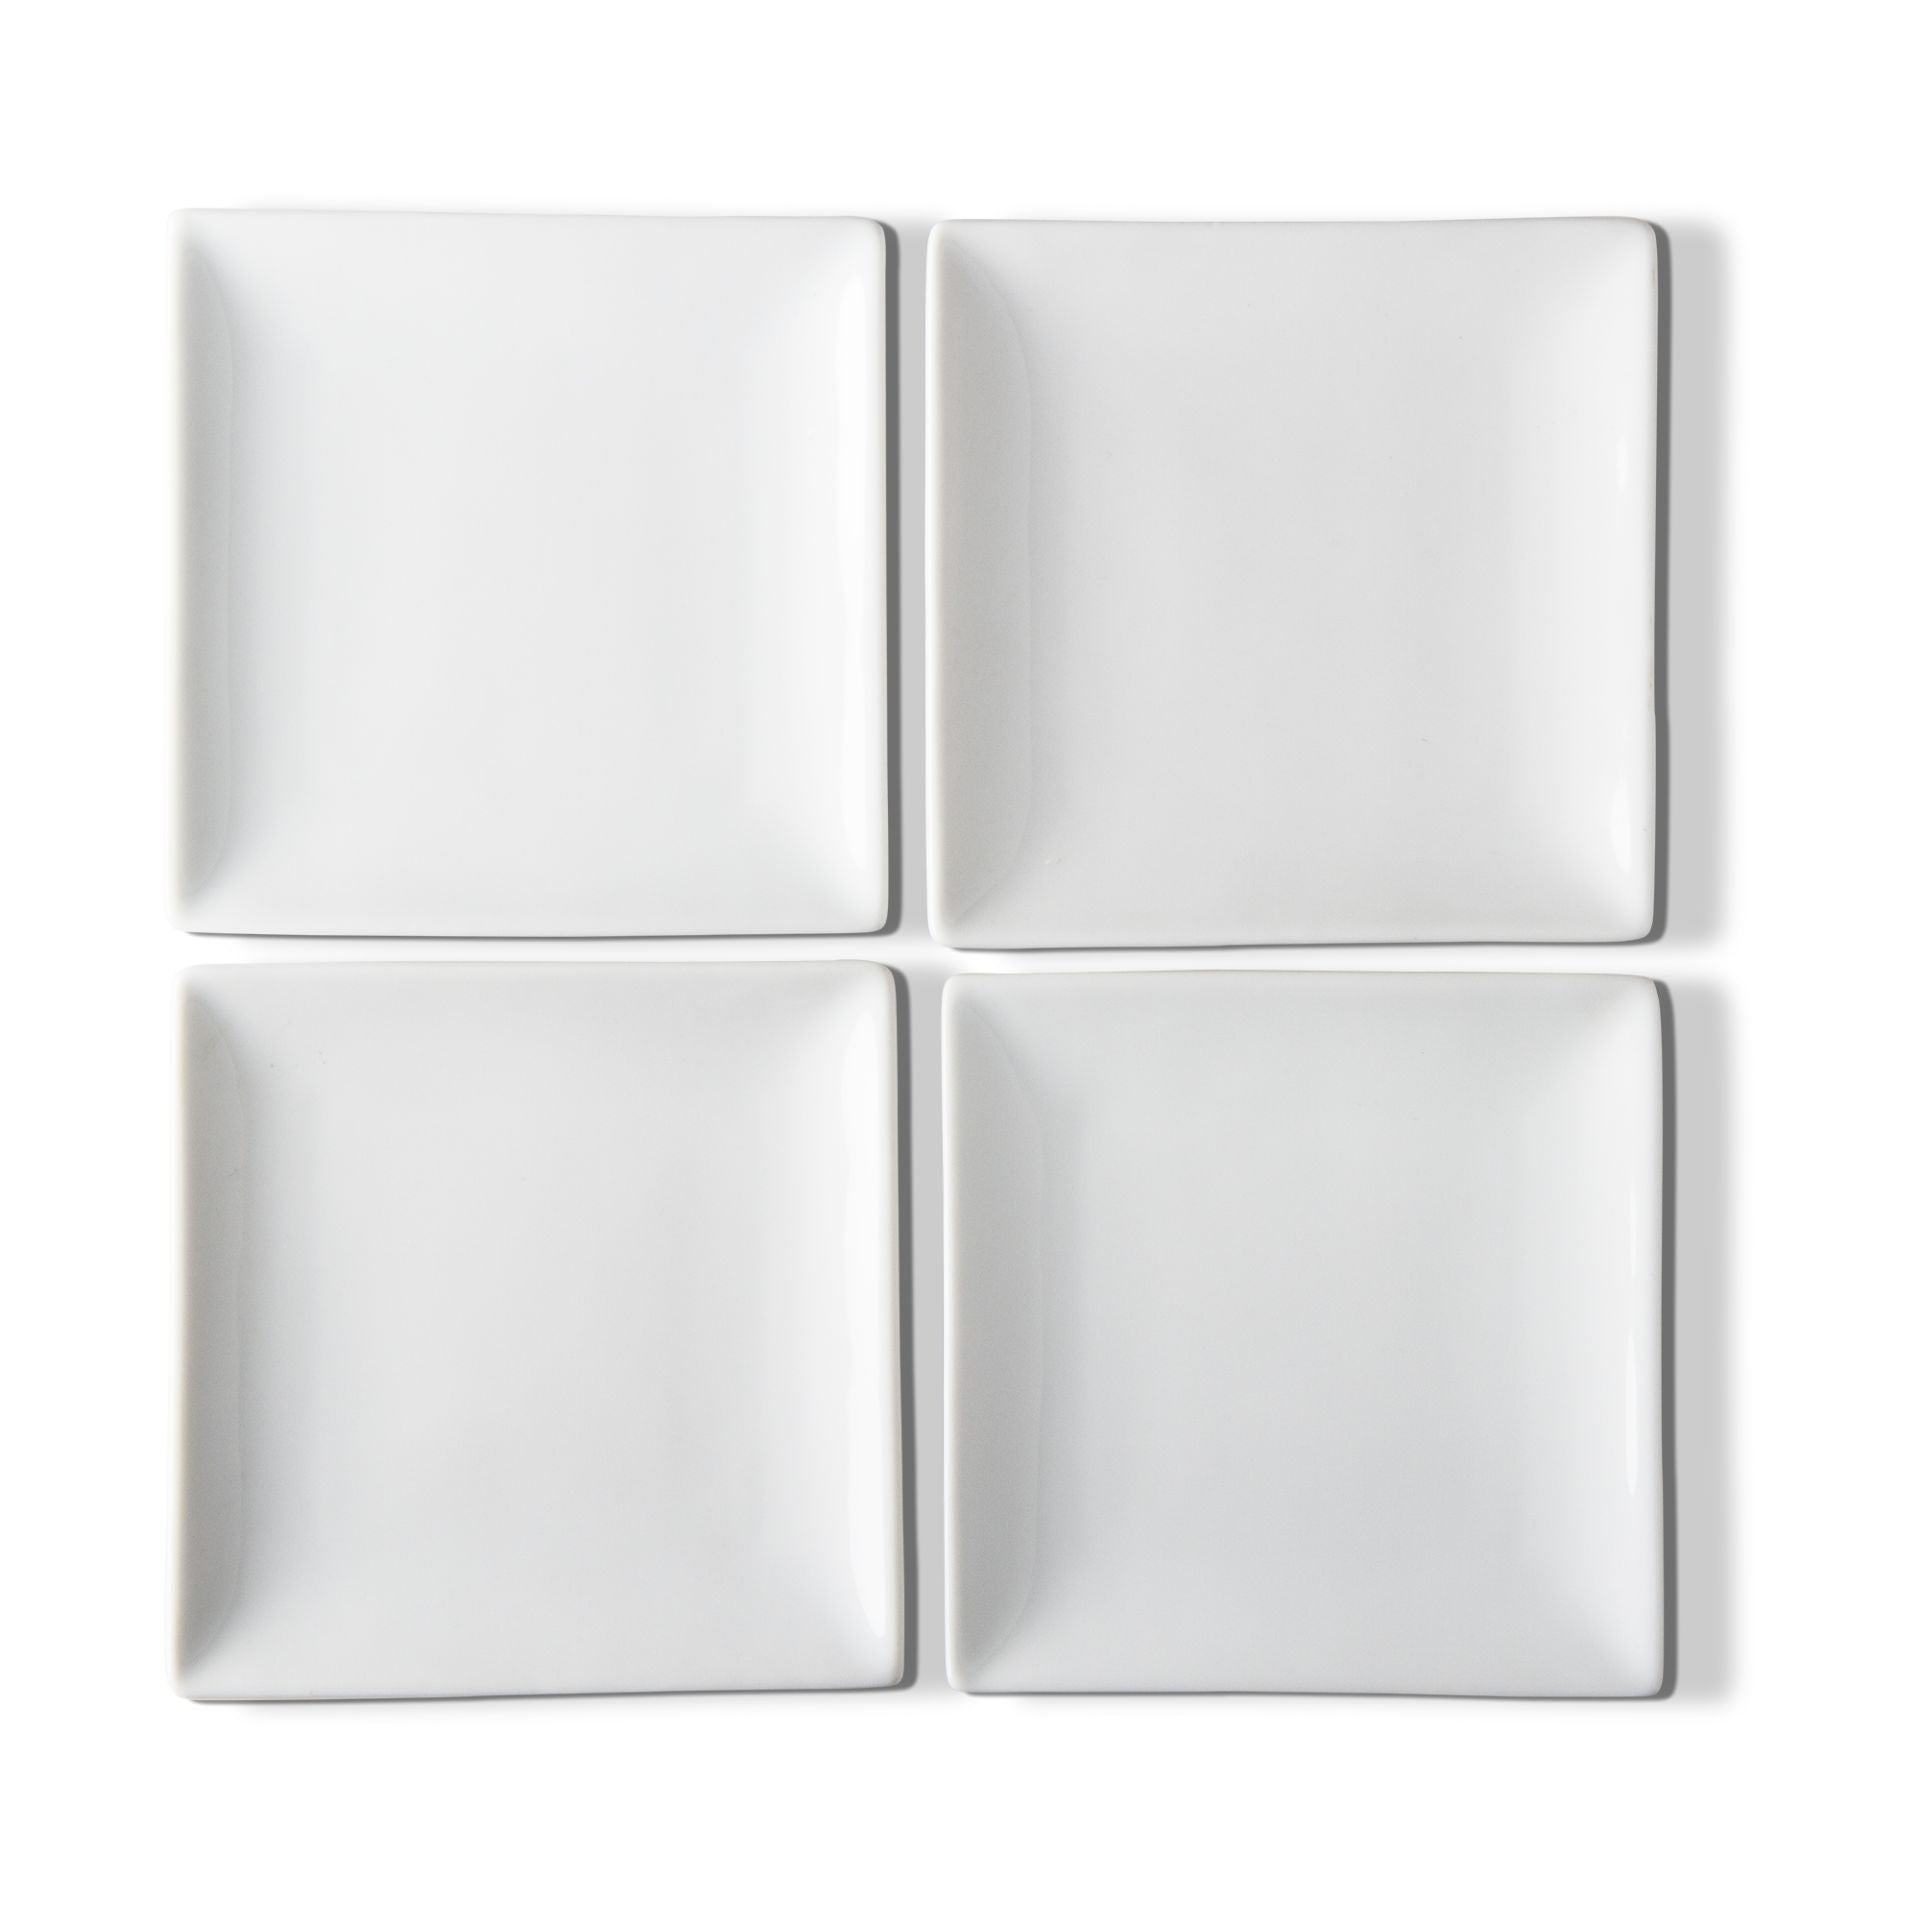 whiteware square plate set of 4 - white